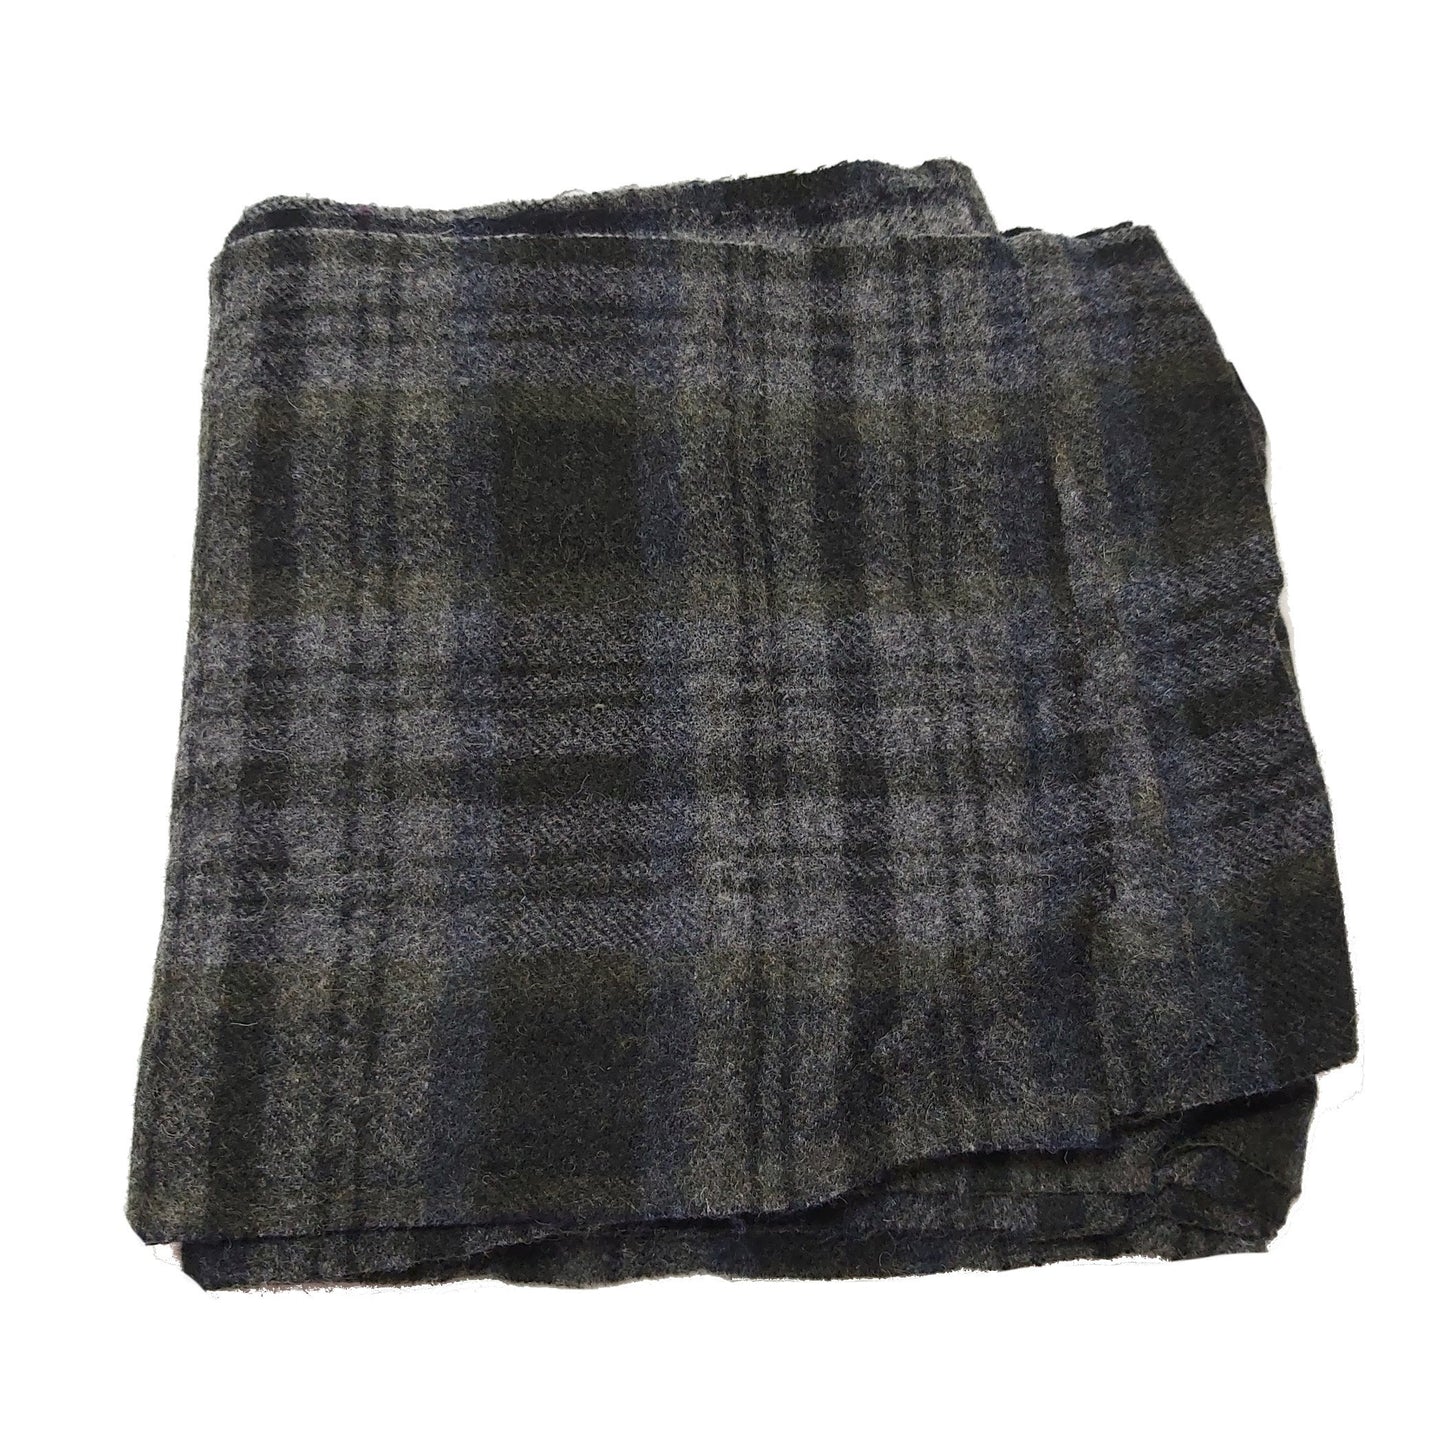 Tweed Fabric - Olive/D Grey/Black Check 25cm wide Super Heavy 118